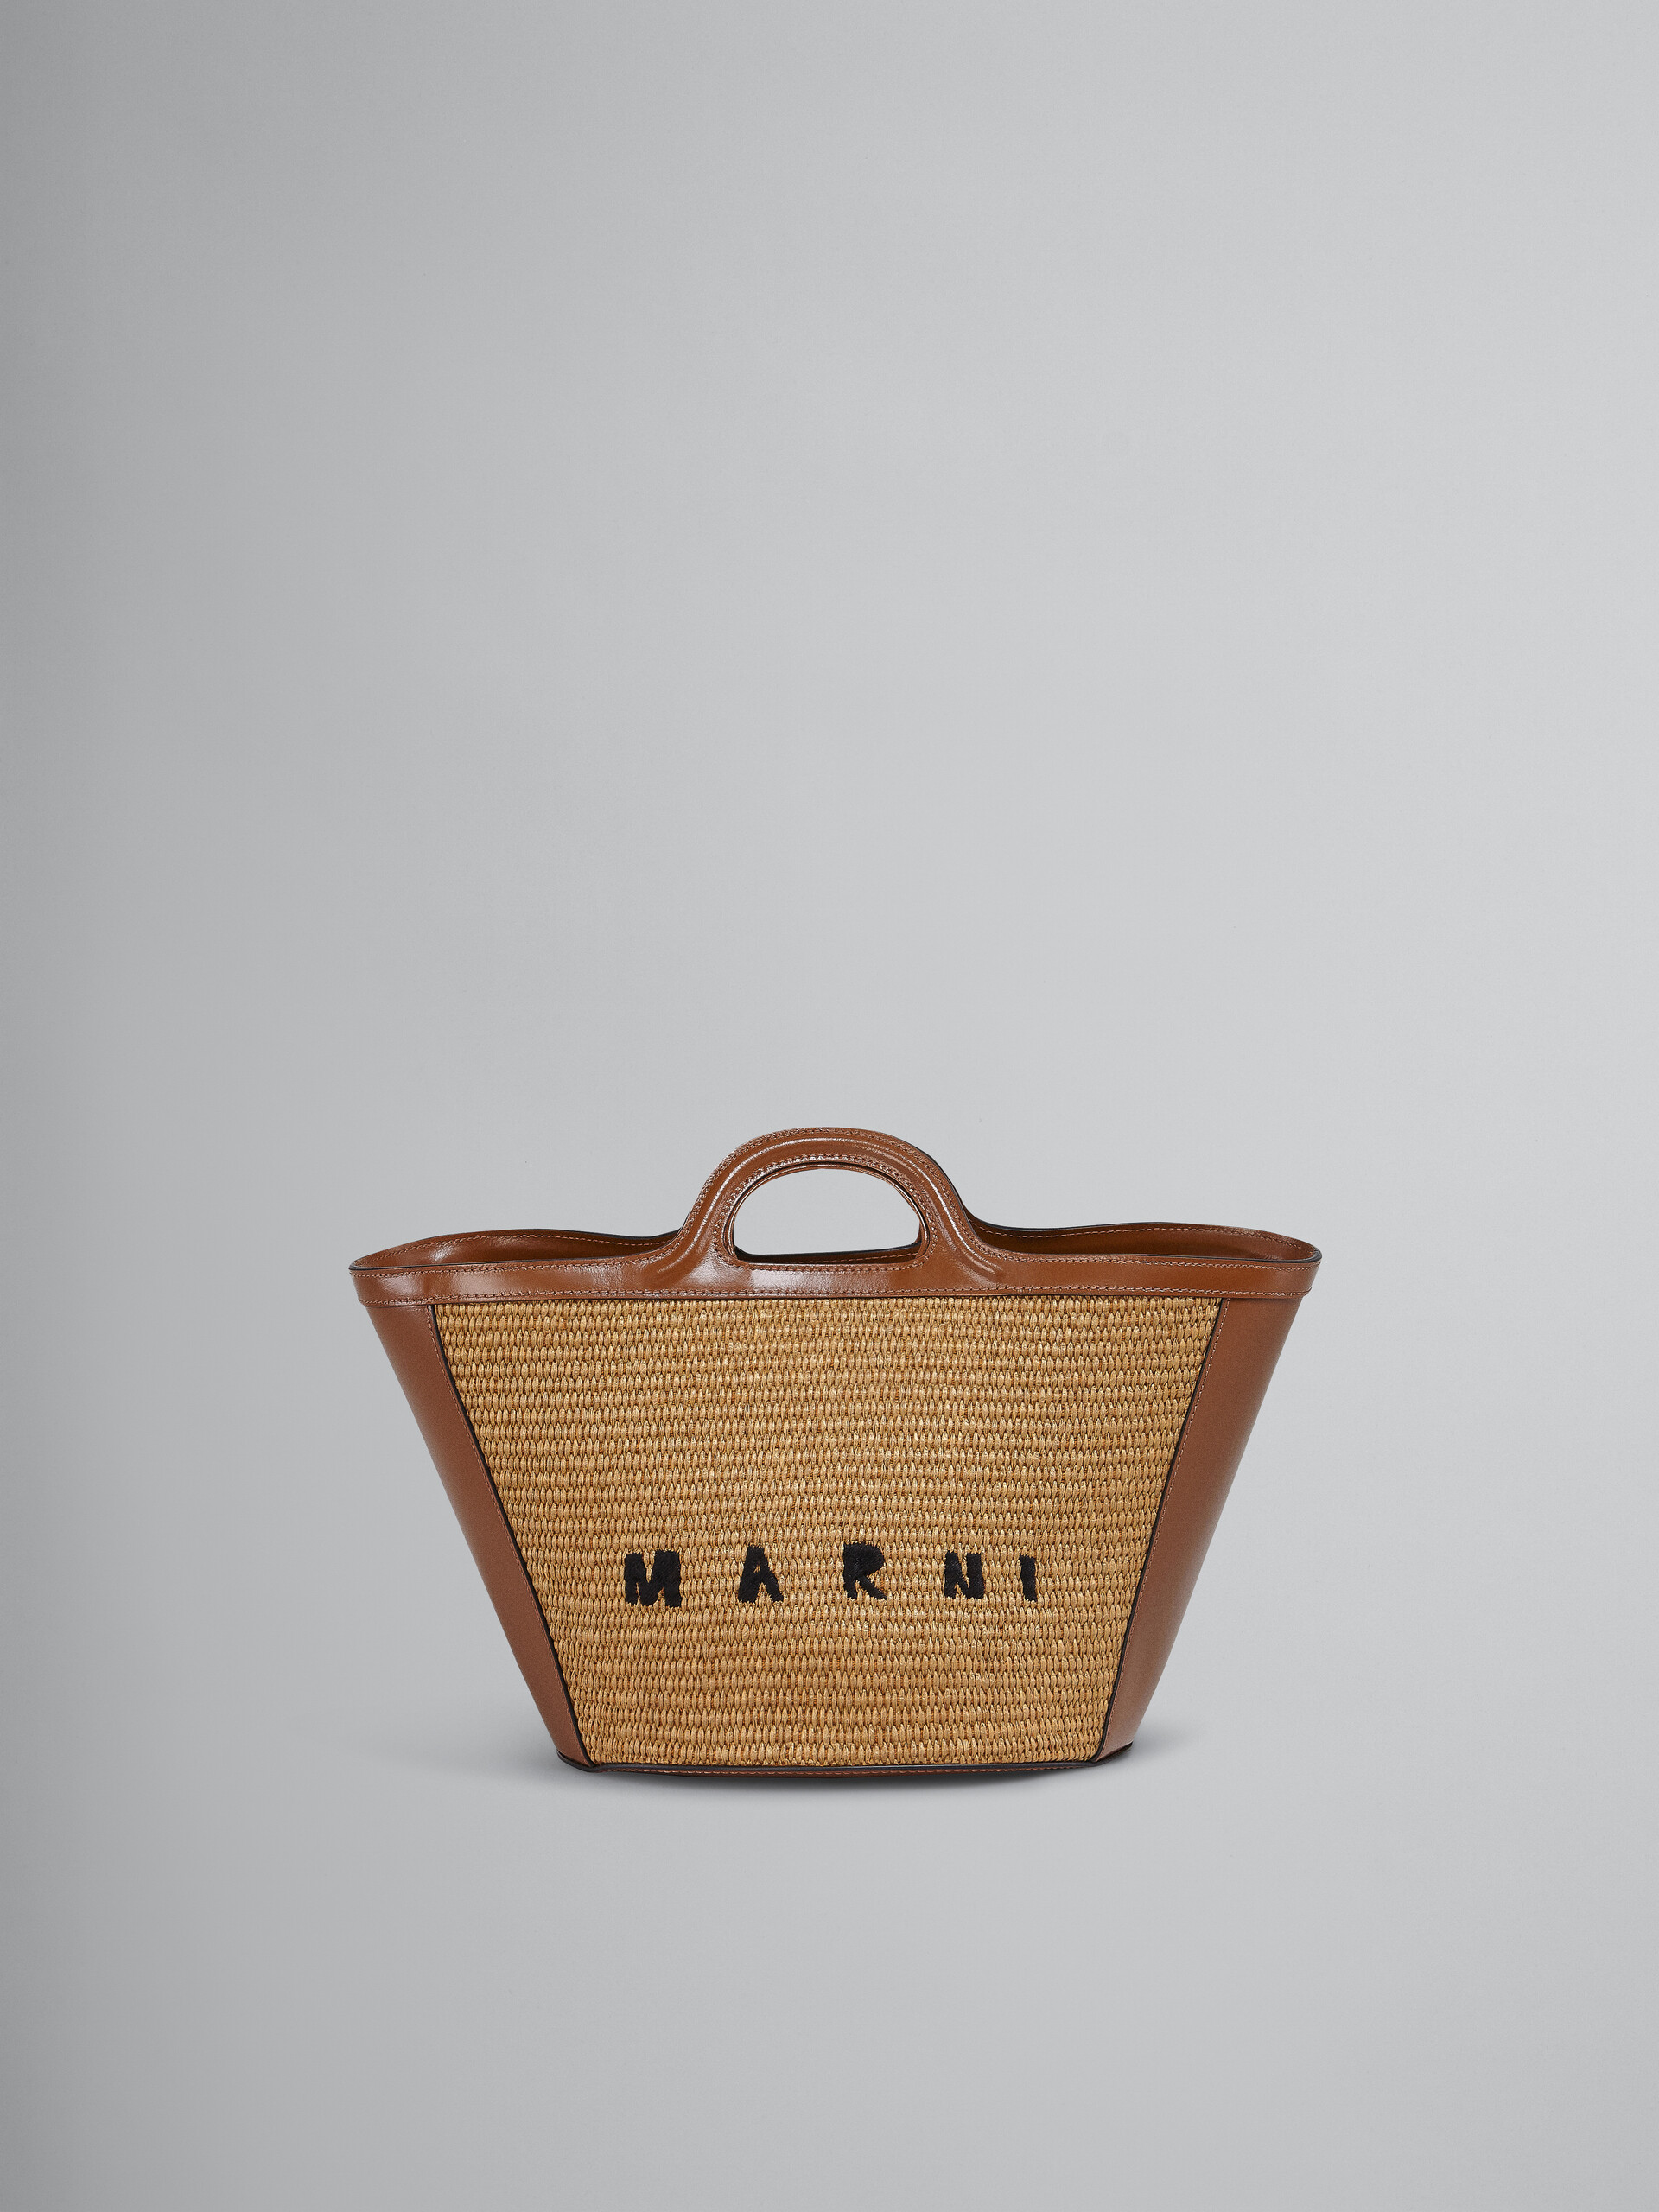 Tropicalia Small Bag in brown leather and raffia-effect fabric - Handbag - Image 1